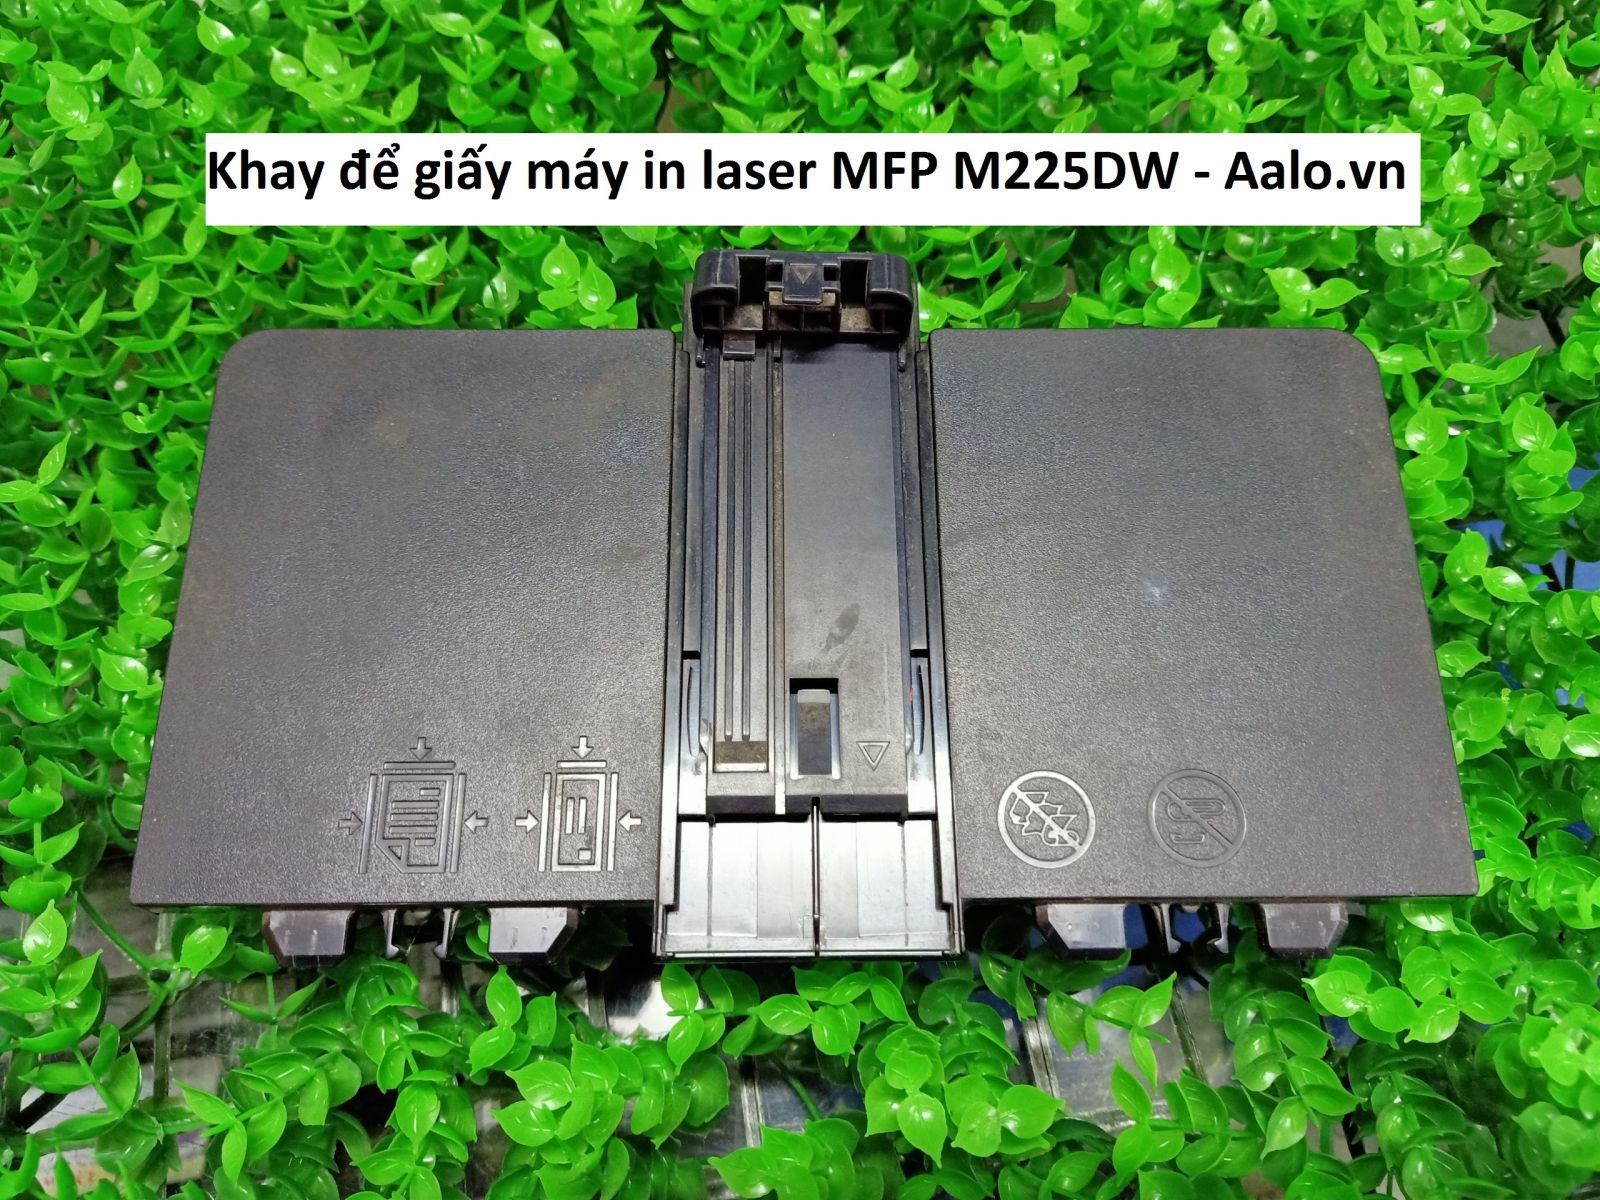 Khay để giấy máy in laser MFP M225DW - Aalo.vn